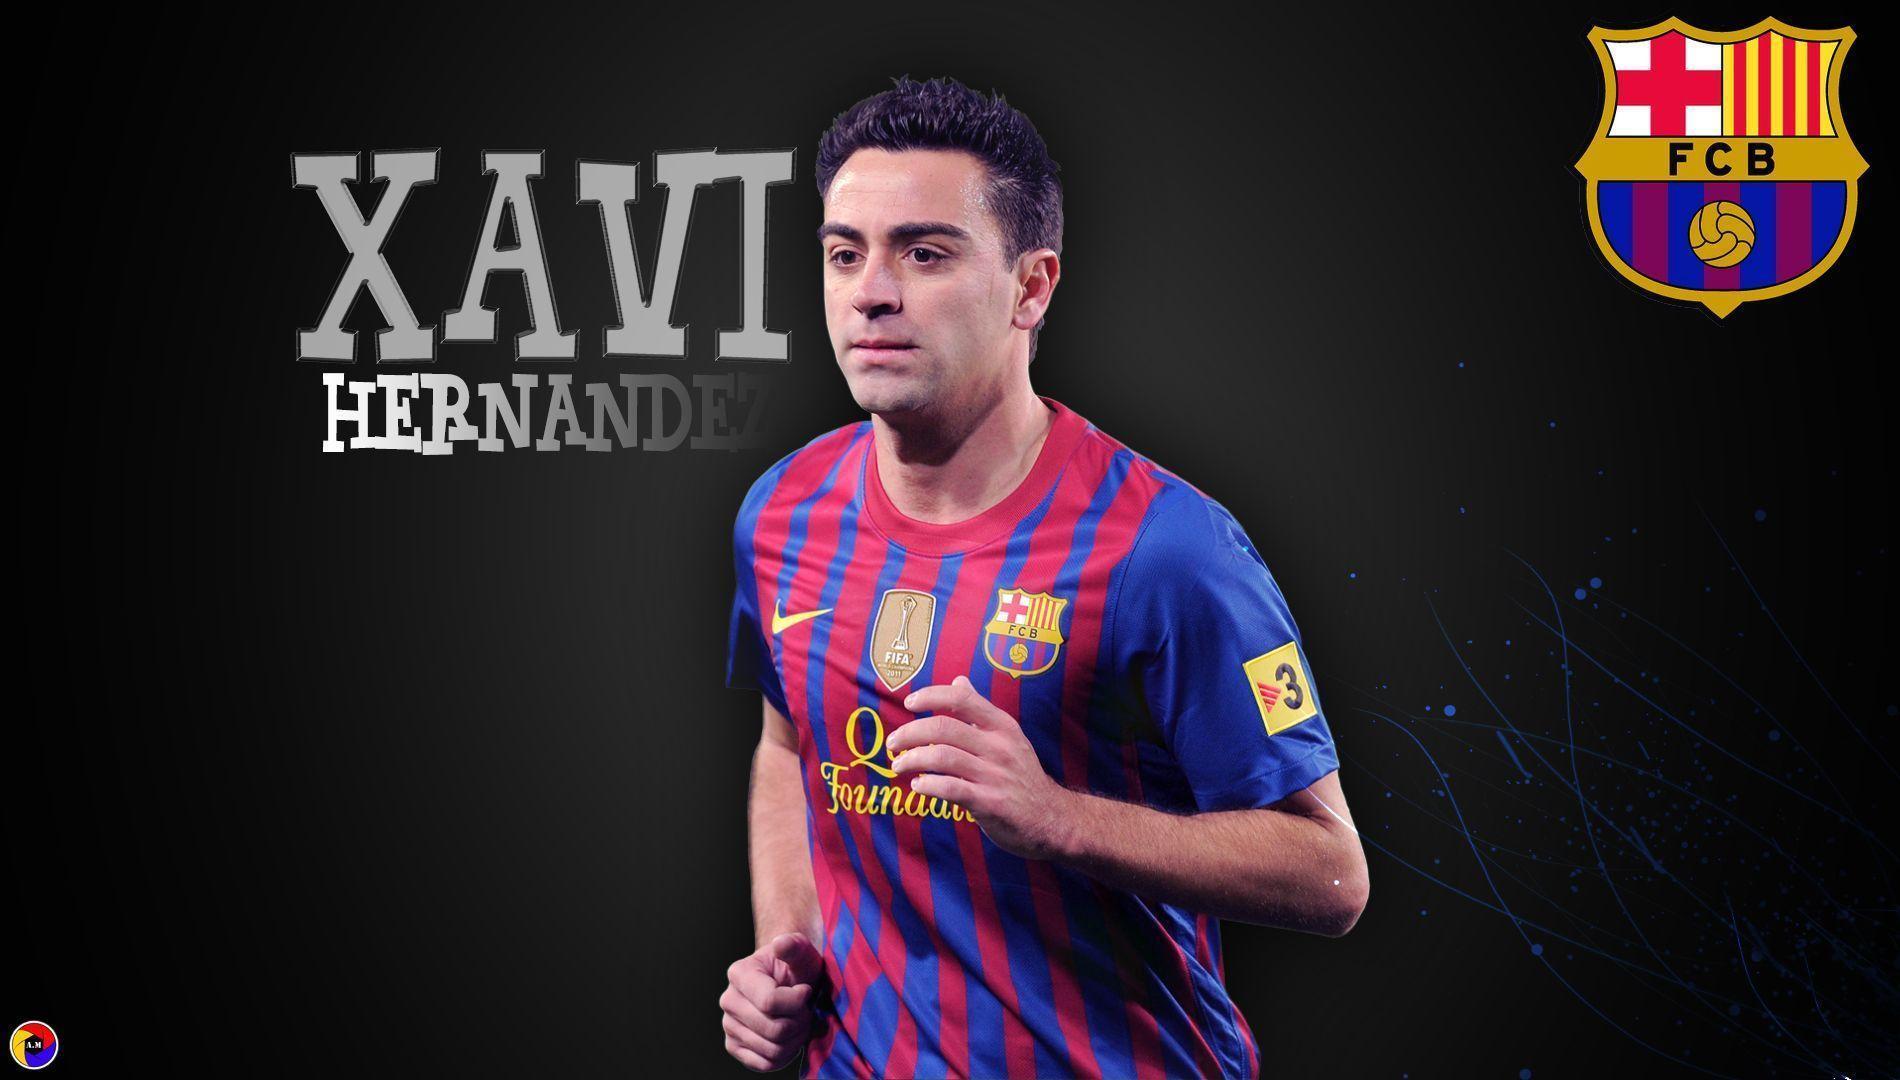 Xavi Hernandez FC Barcelona Wallpaper HD Wallpaper